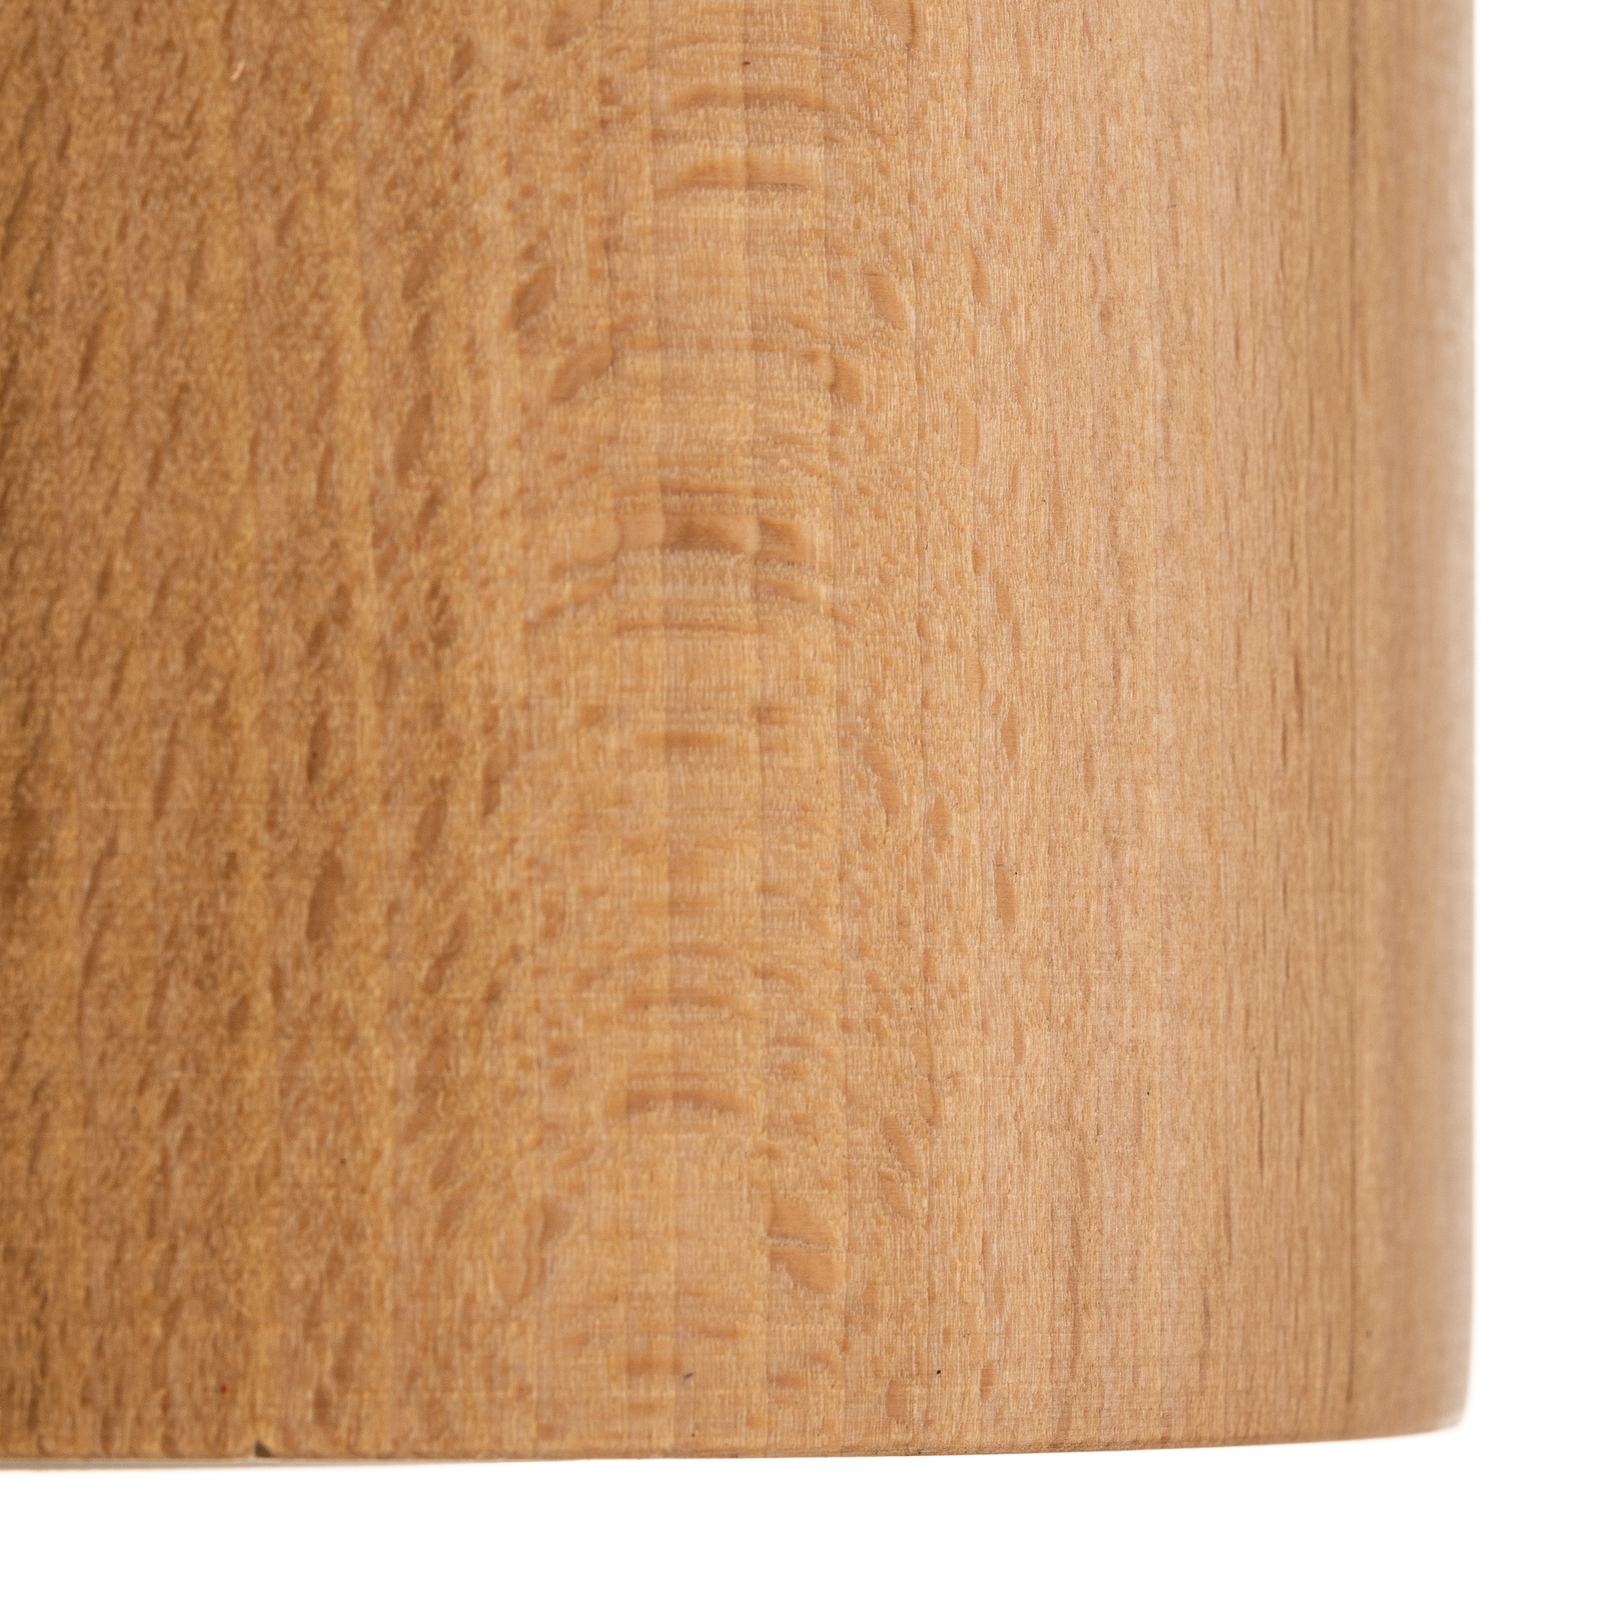 Lampa sufitowa Block okrągłe drewno, naturalna